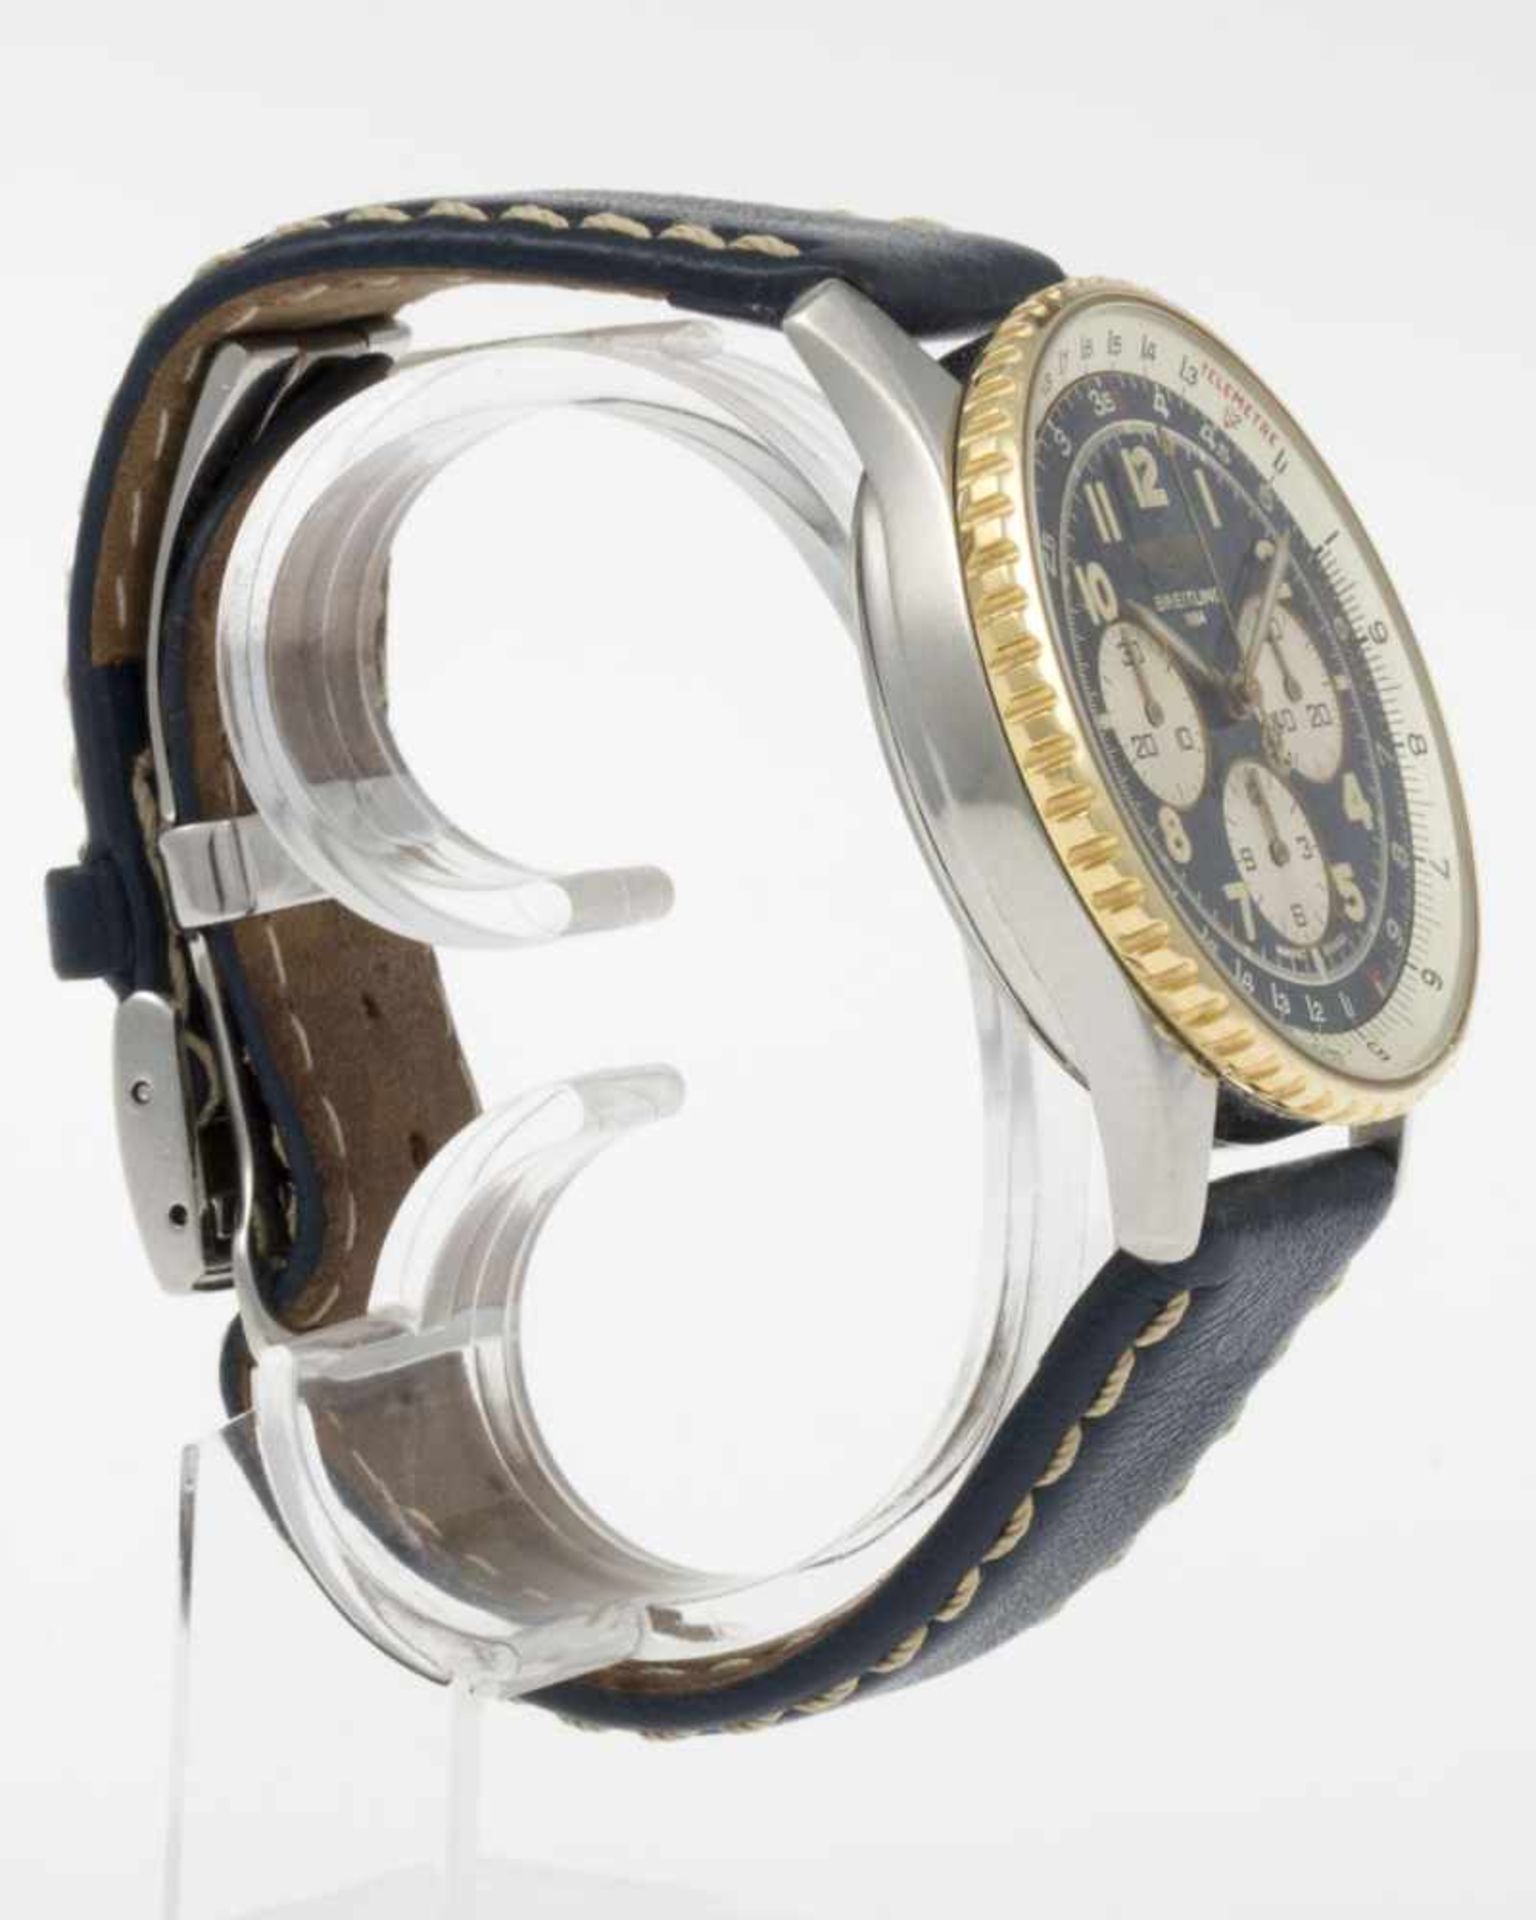 Breitling-Armbanduhr Chronograph Navitimer 92Gehäuse aus Stahl. Beidseitig drehbare Lünette aus - Bild 3 aus 5